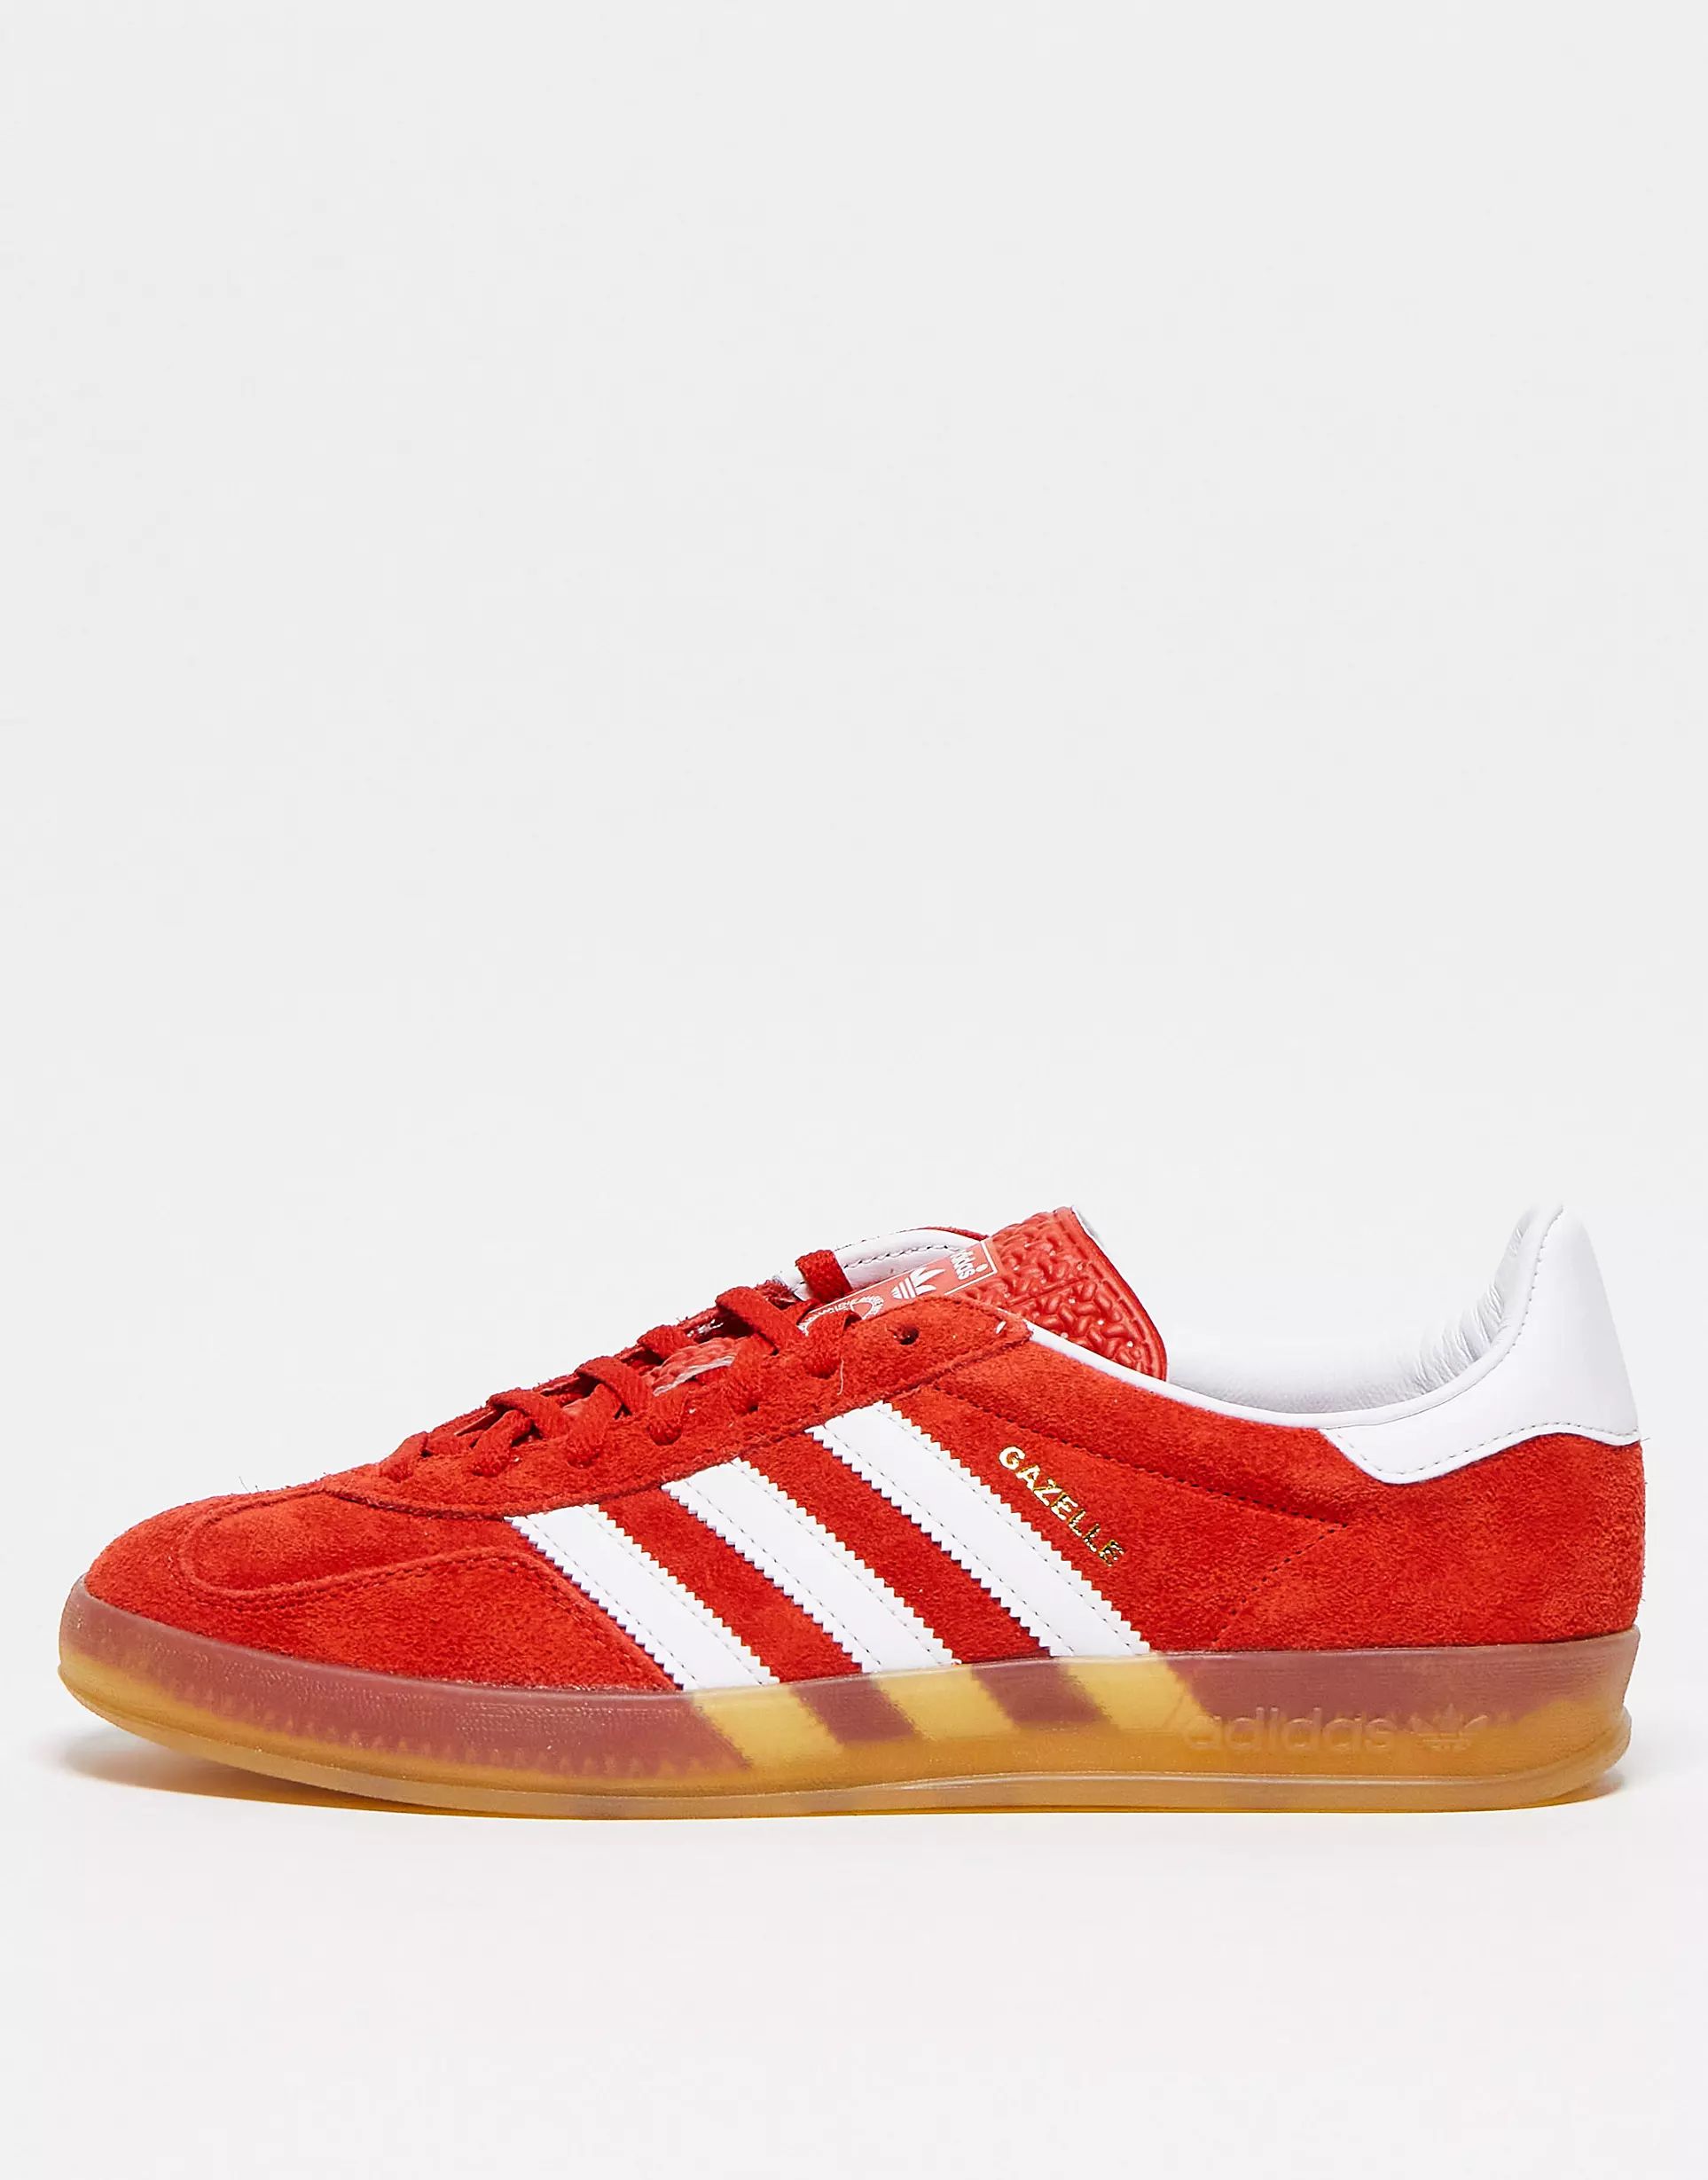 adidas Originals Gazelle Indoor trainers in red with gum sole | ASOS (Global)